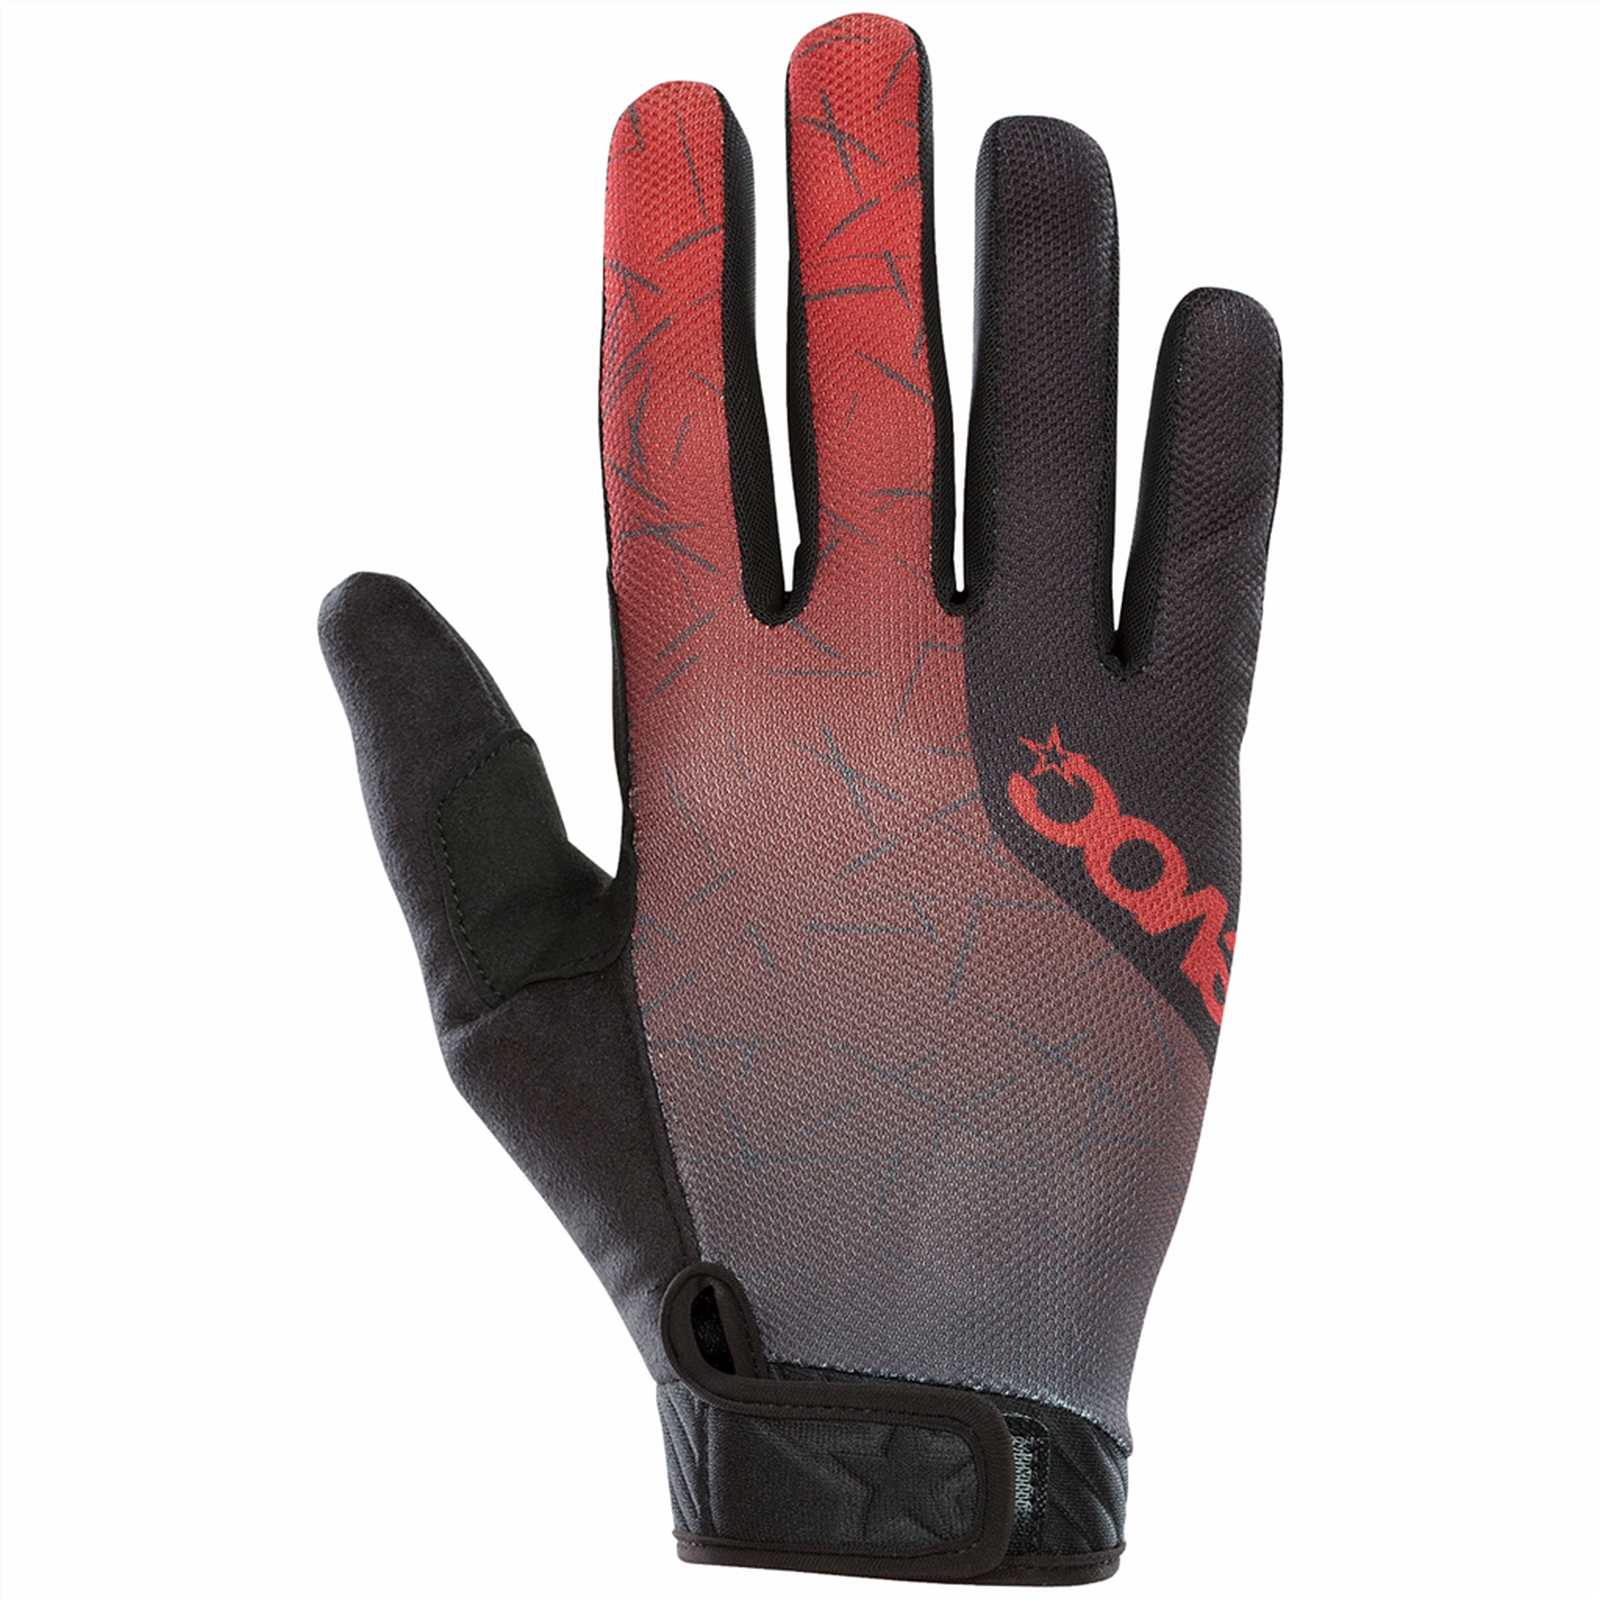 Enduro Touch Glove